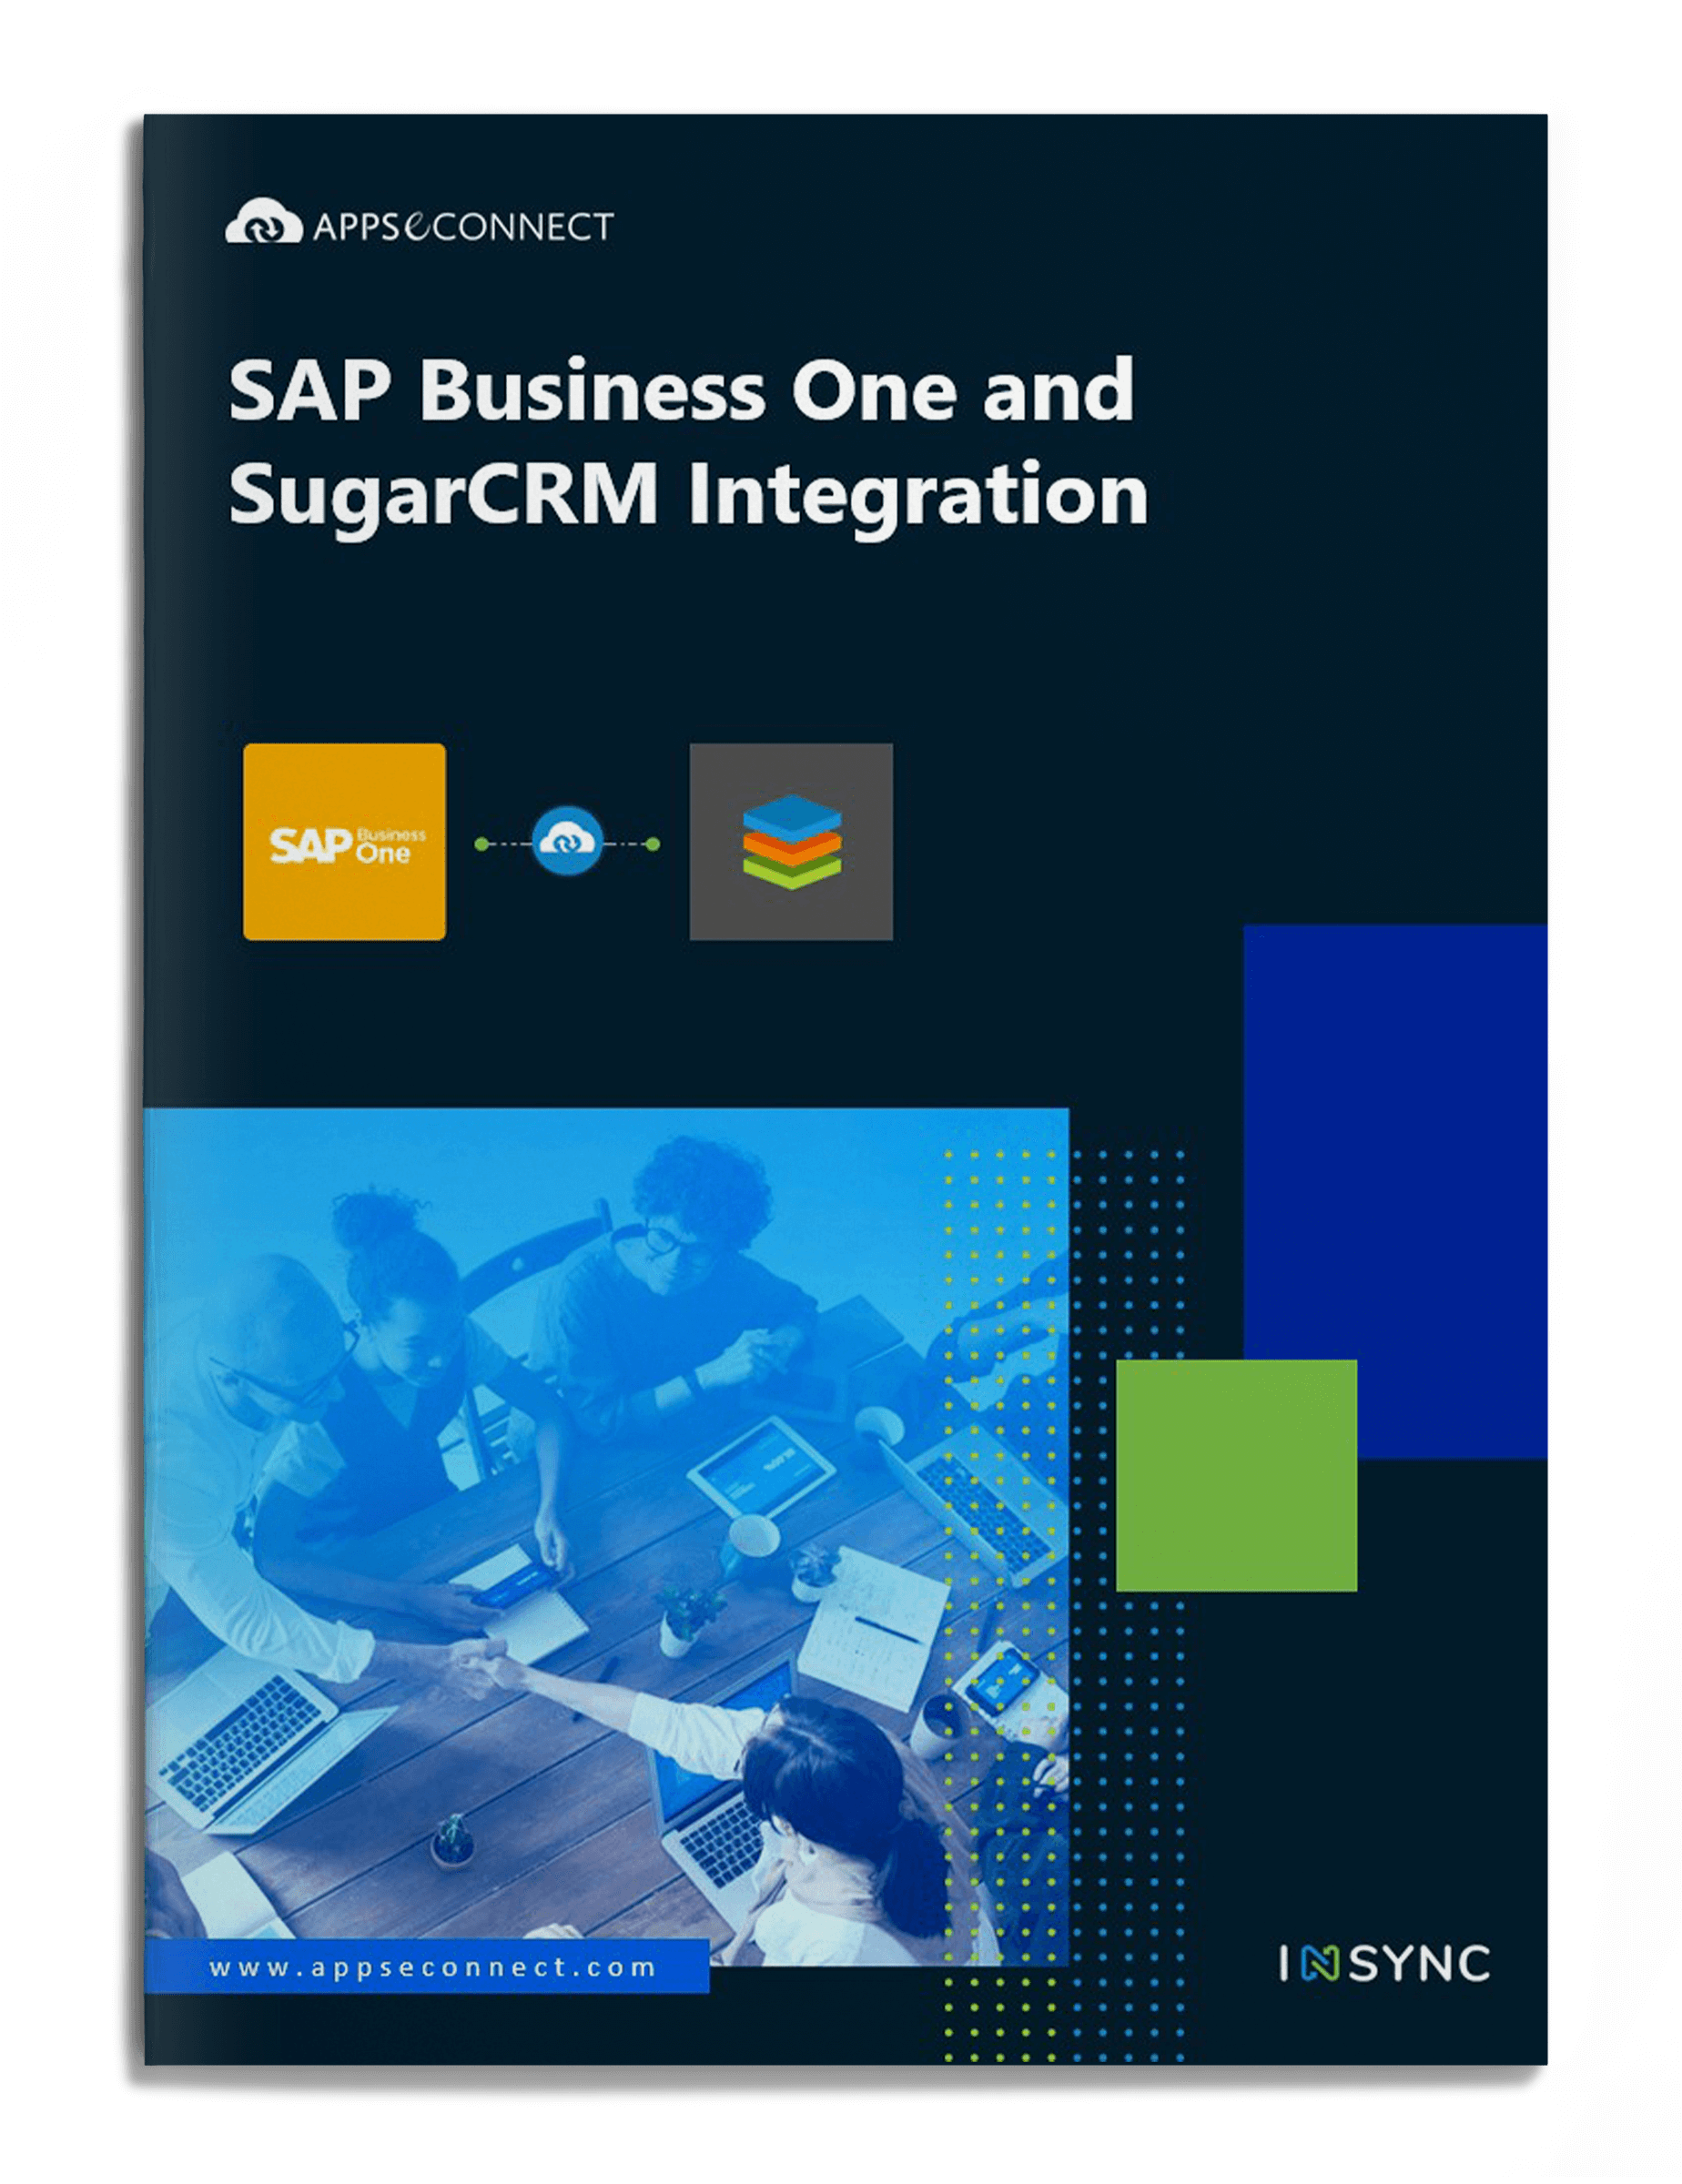 sap-business-one-sugarcrm-integration-brochure-cover